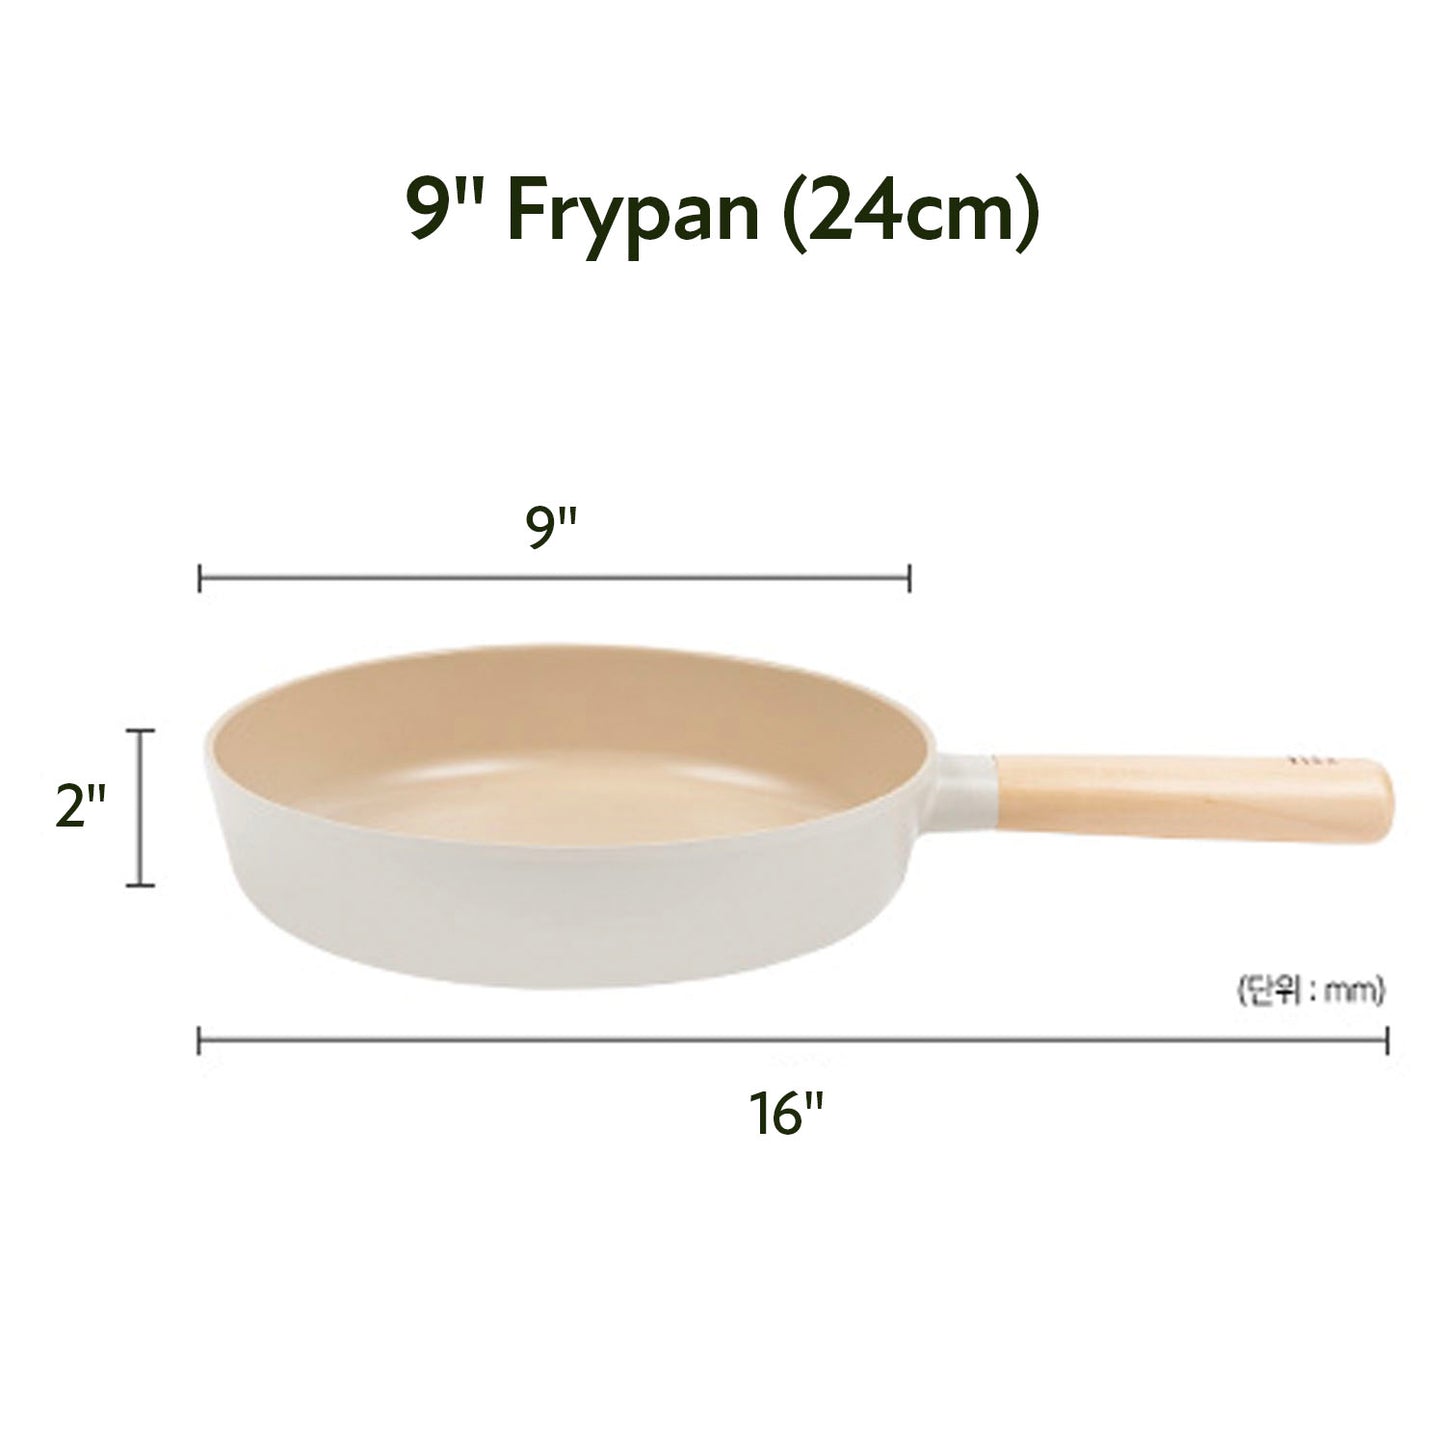 FIKA 9" Frypan (24cm) - Neoflam